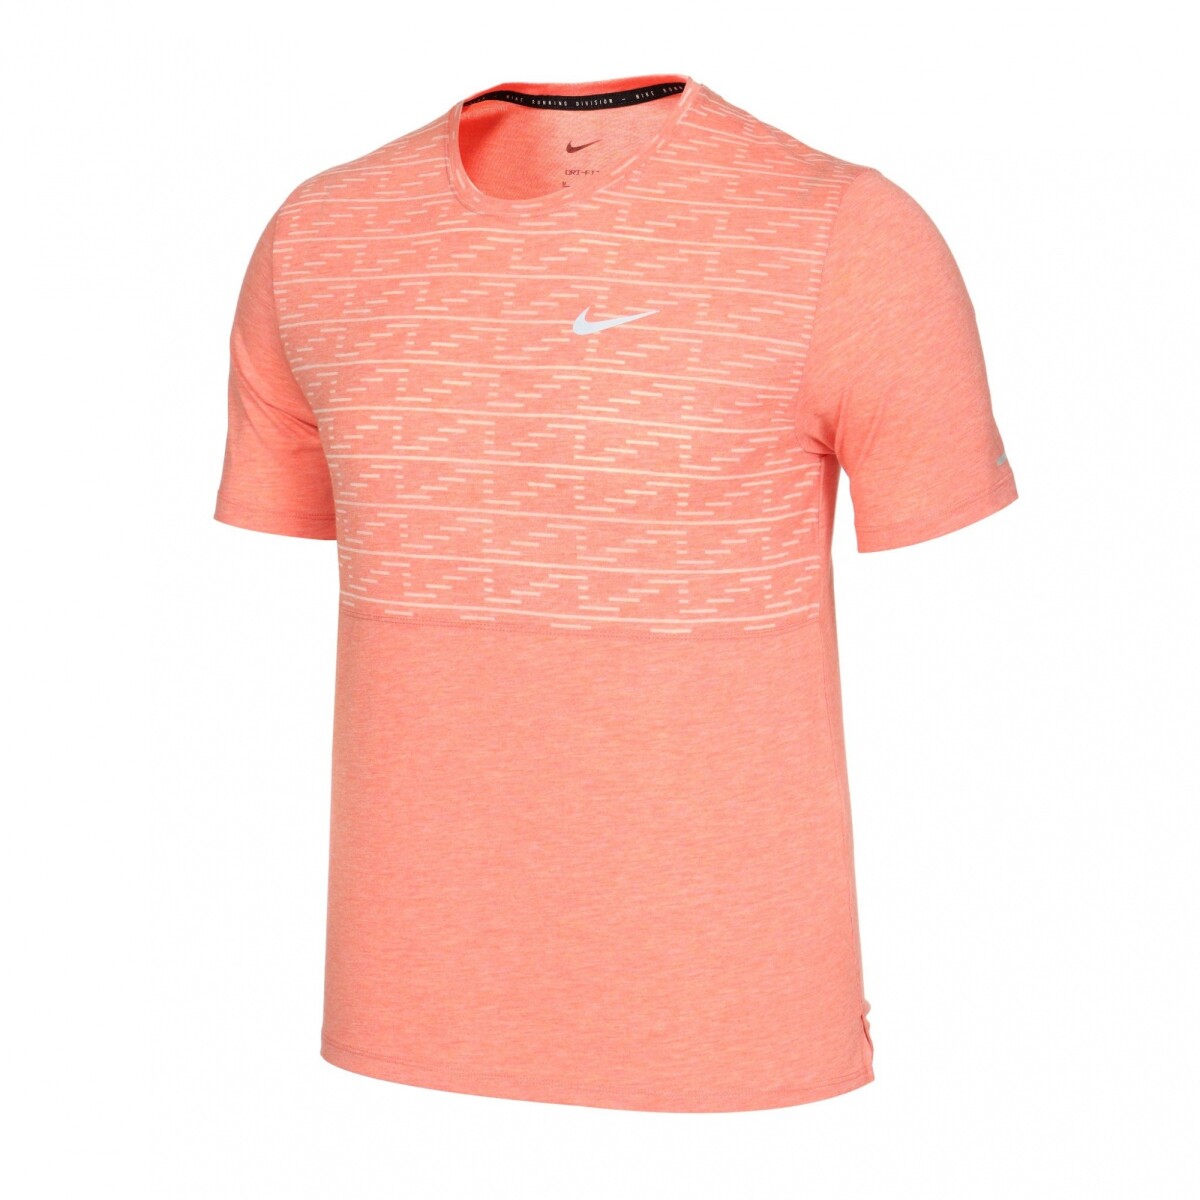 Remera Nike Running Hombre Brnot Miler Magic Rosa - Color Único 